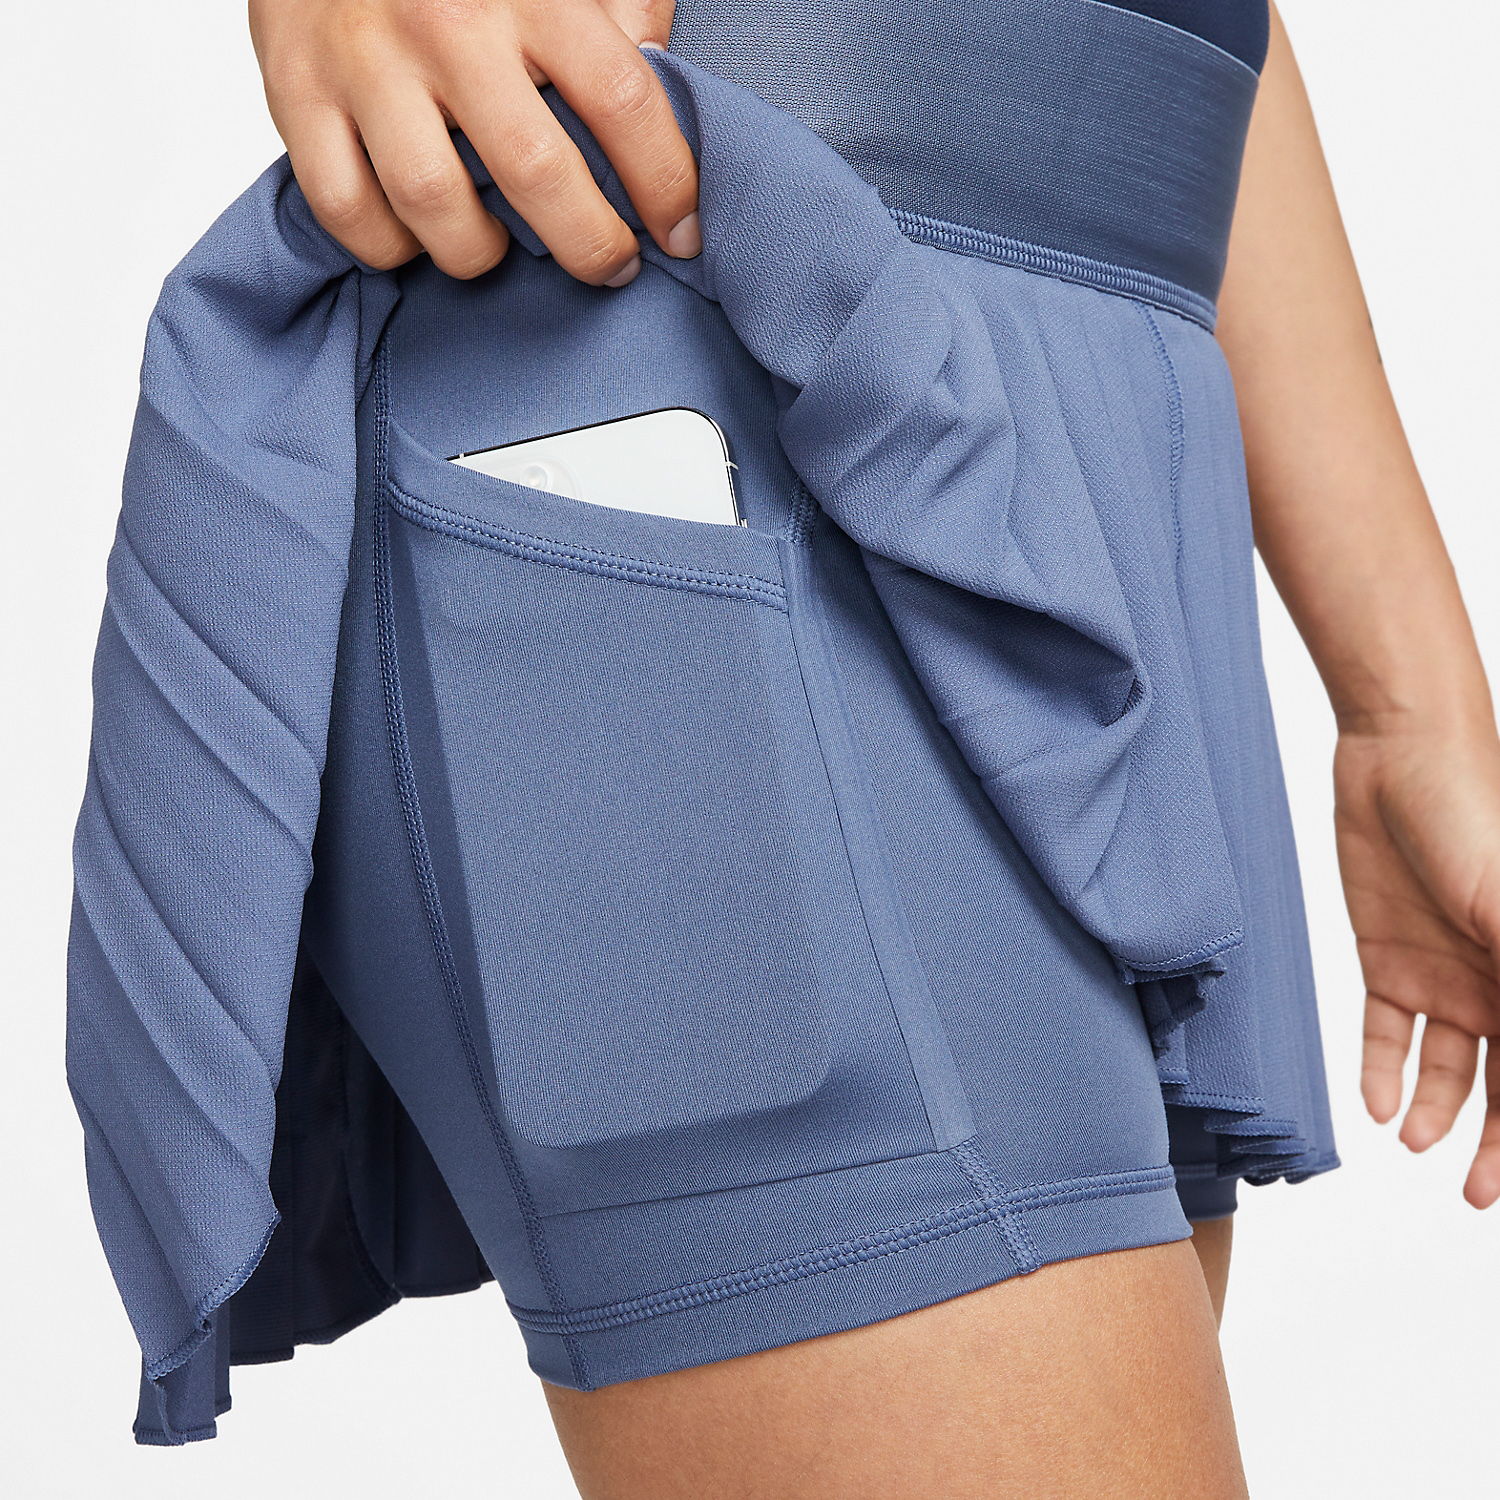 Nike Court Dri-FIT Advantage Skirt - Diffused Blue/White